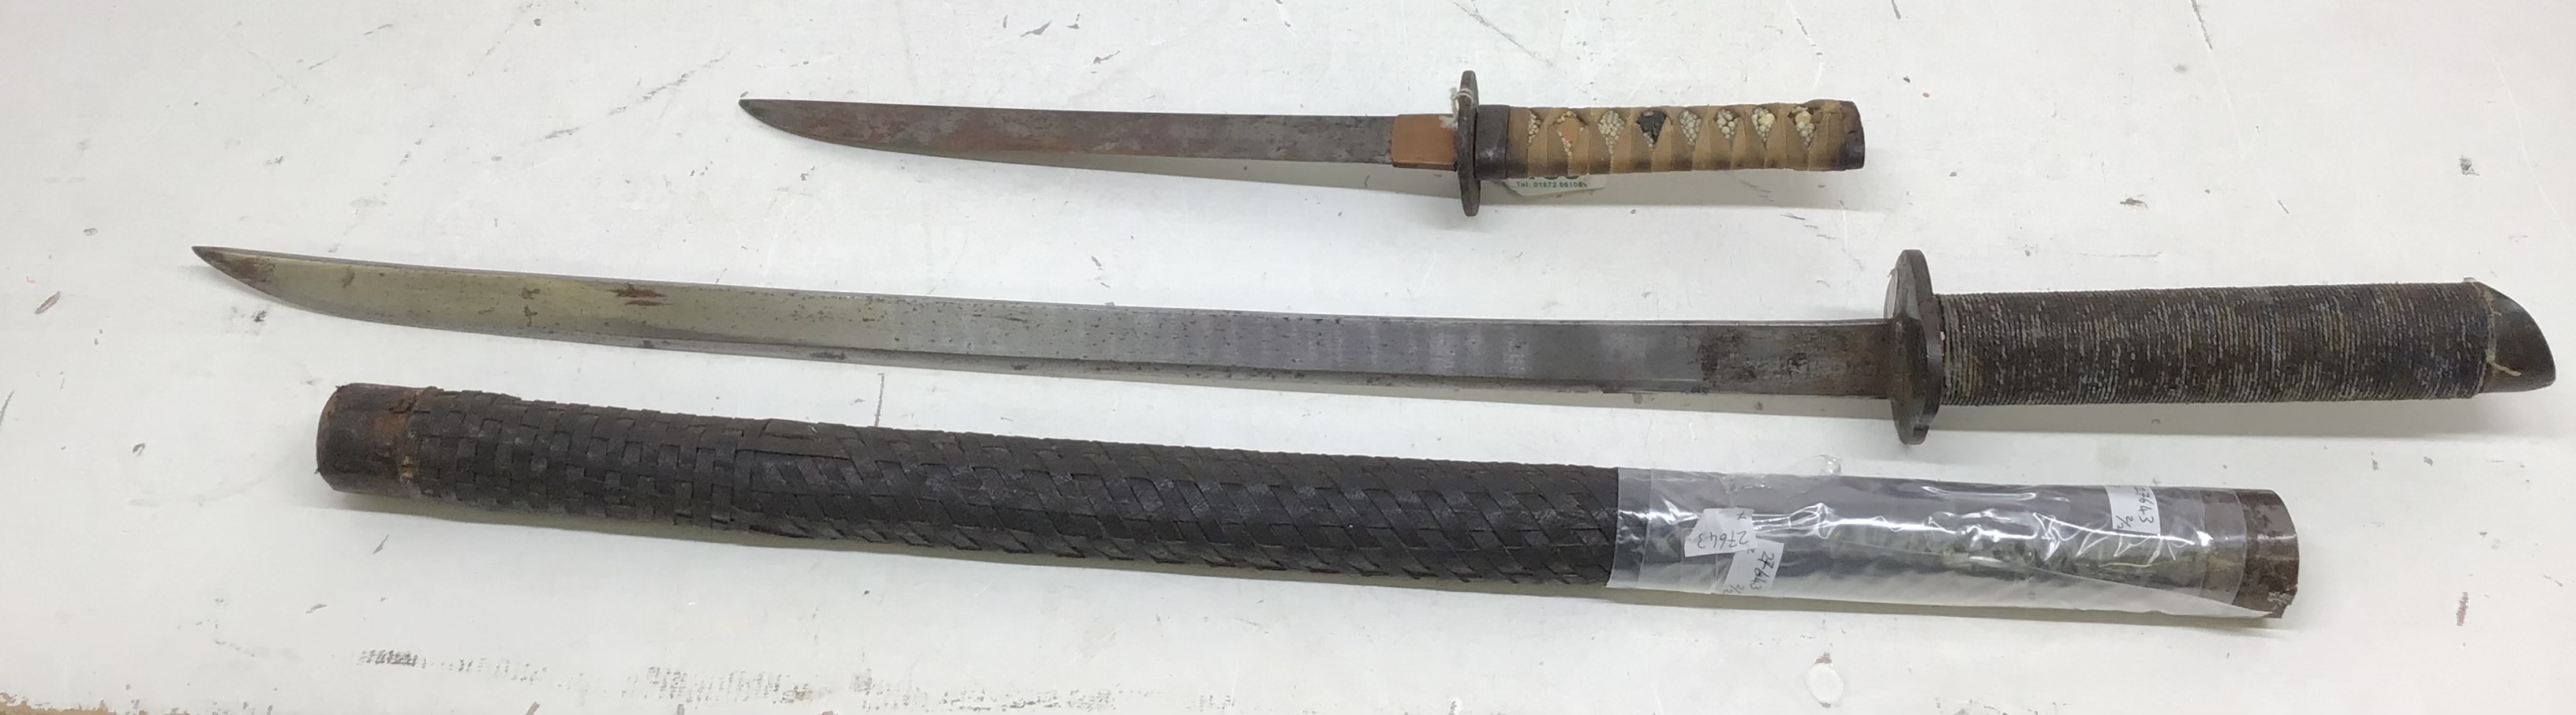 A Japanese Tanto Dagger with Period imitation Katana with heavy metal blade. Tanto Dagger has